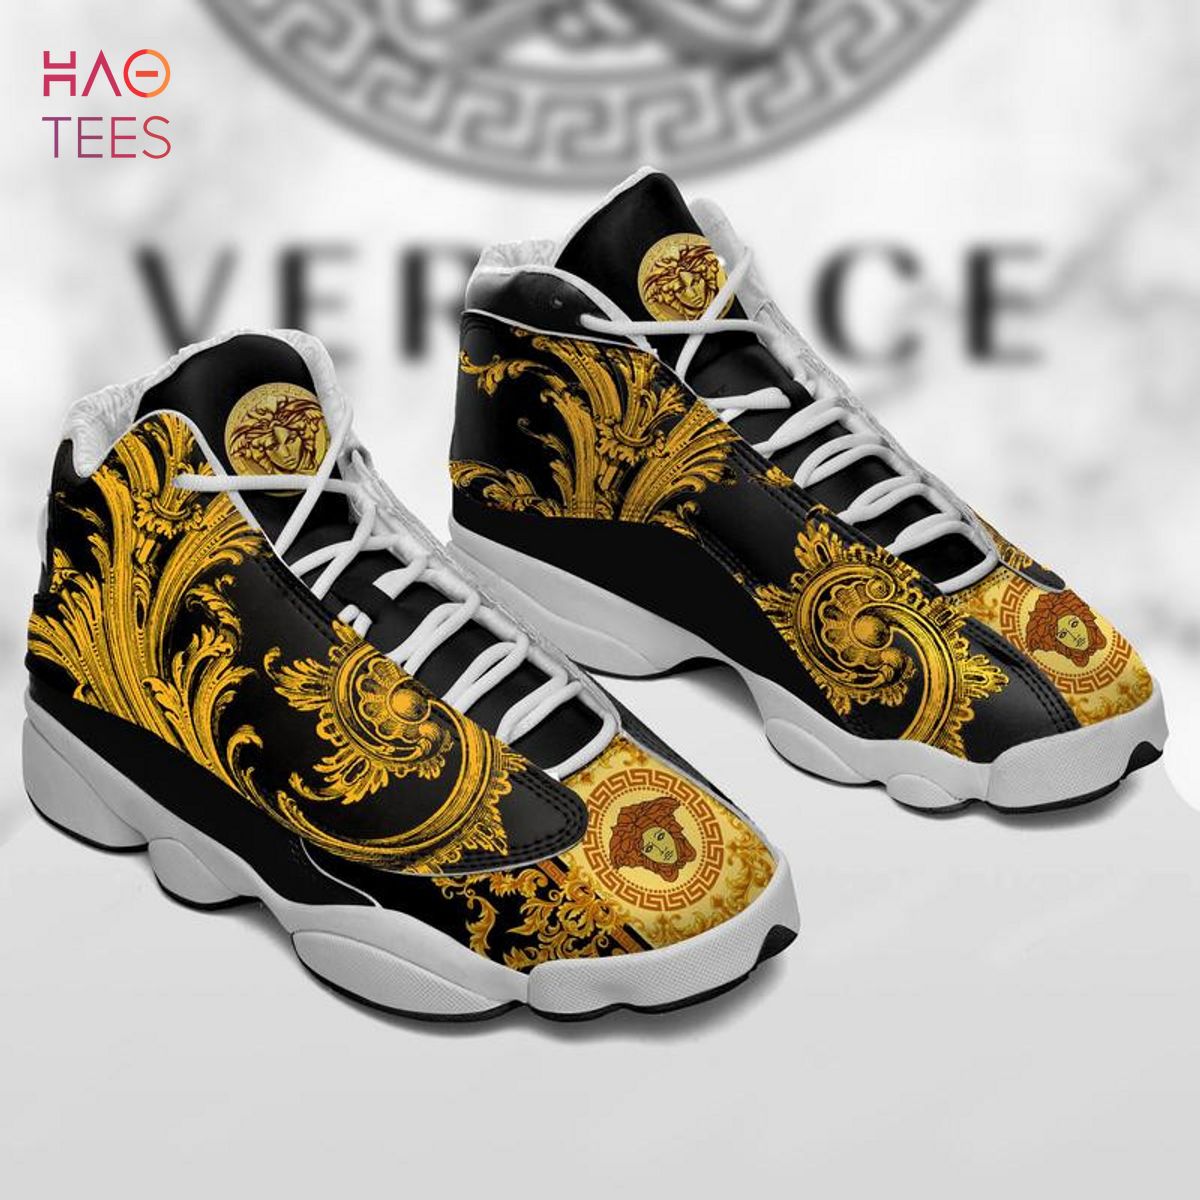 [BEST] Versace Air Jordan 13 Sneaker Hot Trend